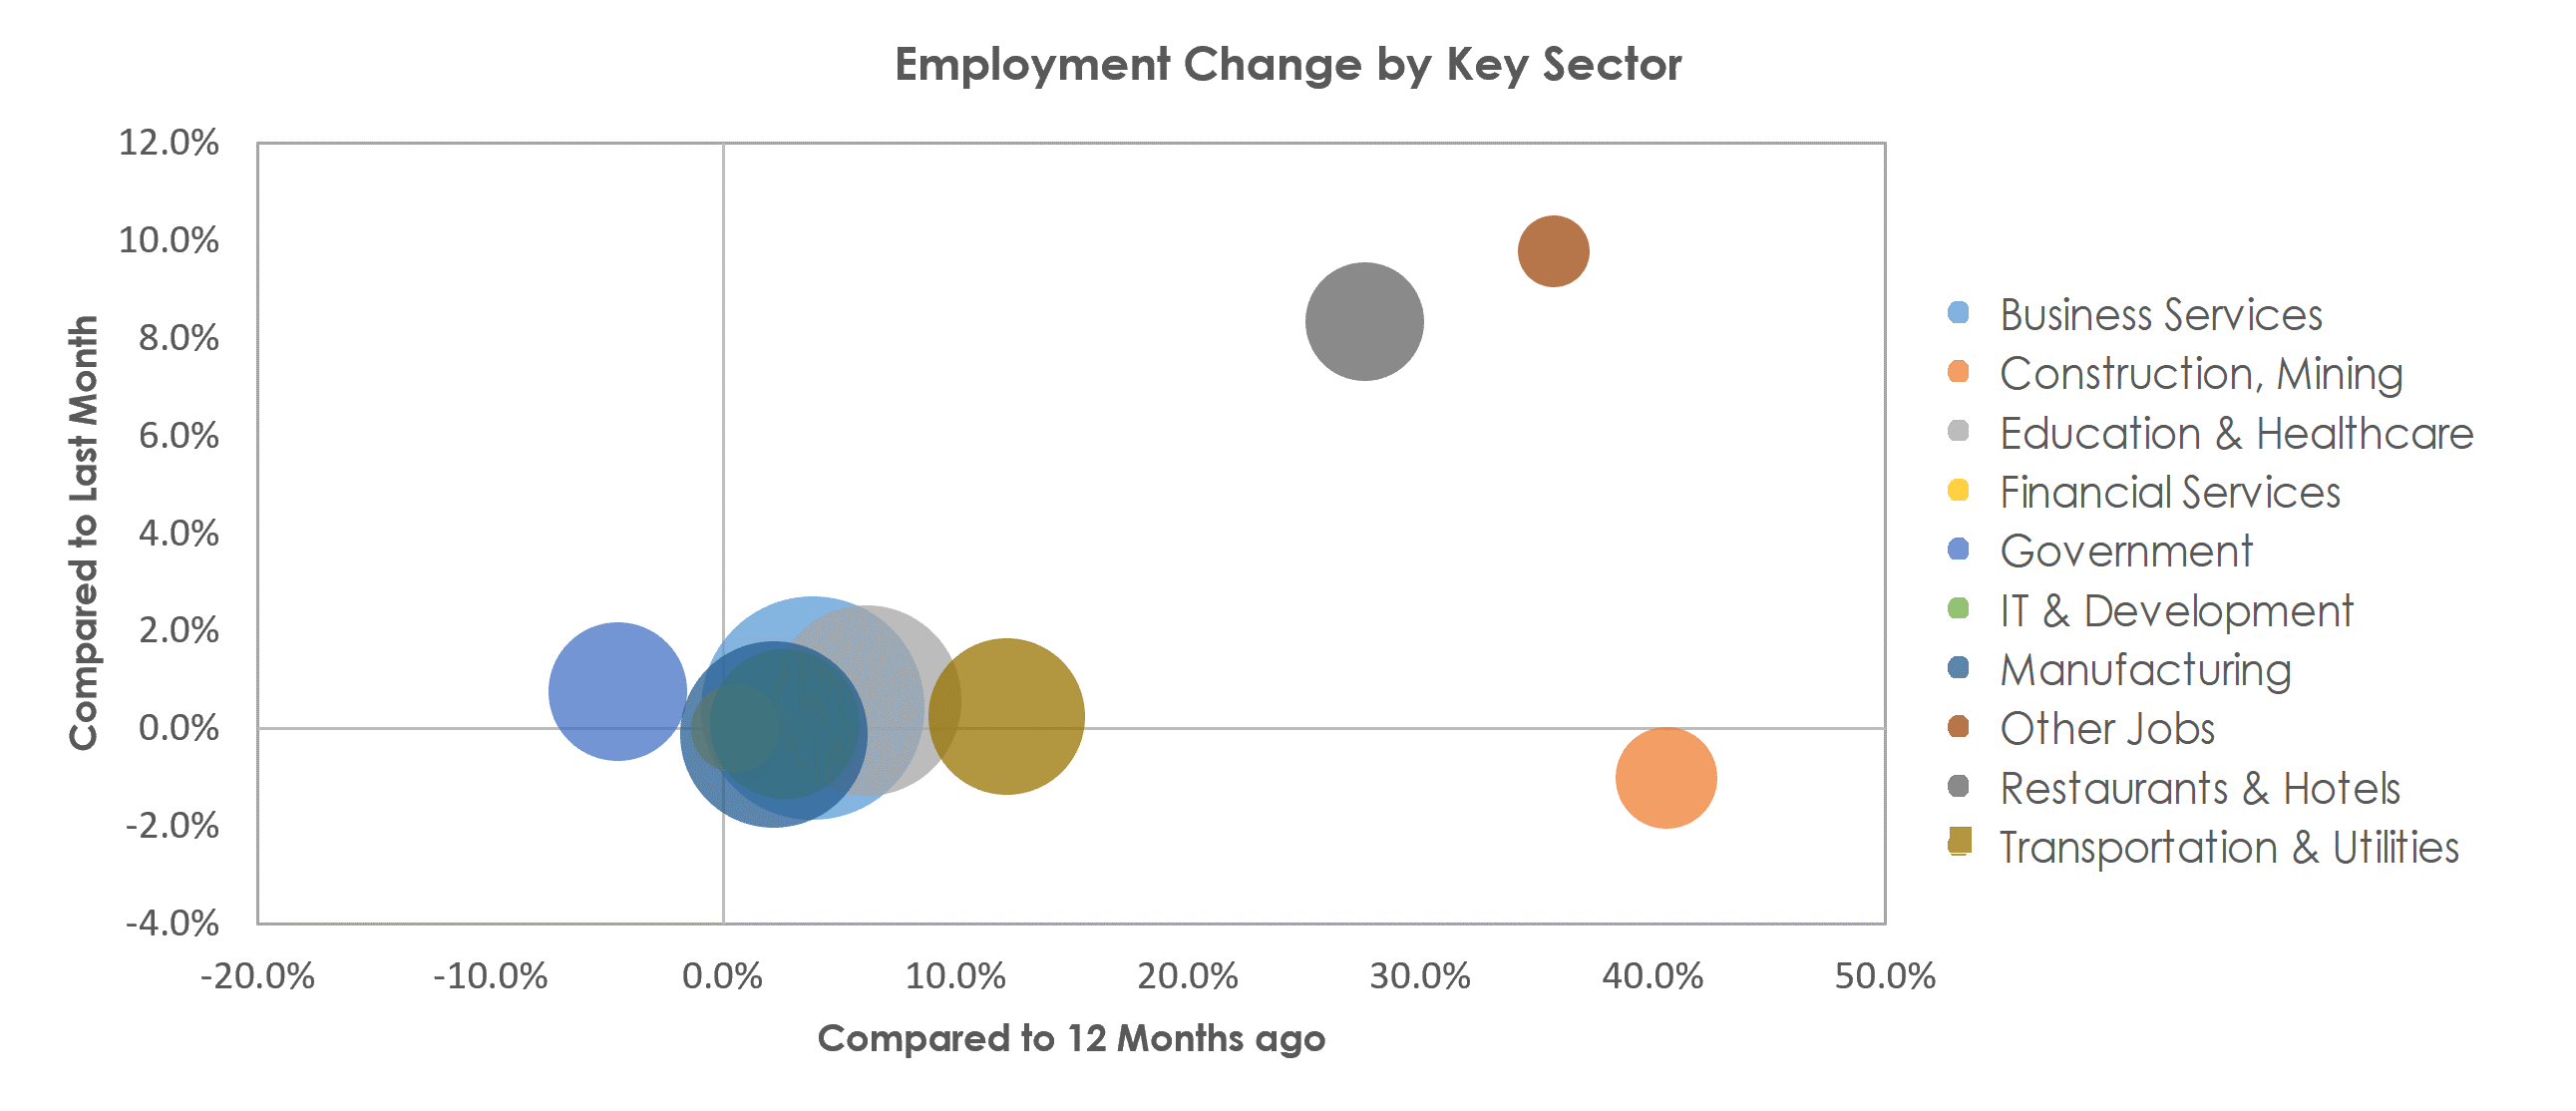 San Jose-Sunnyvale-Santa Clara, CA Unemployment by Industry April 2021